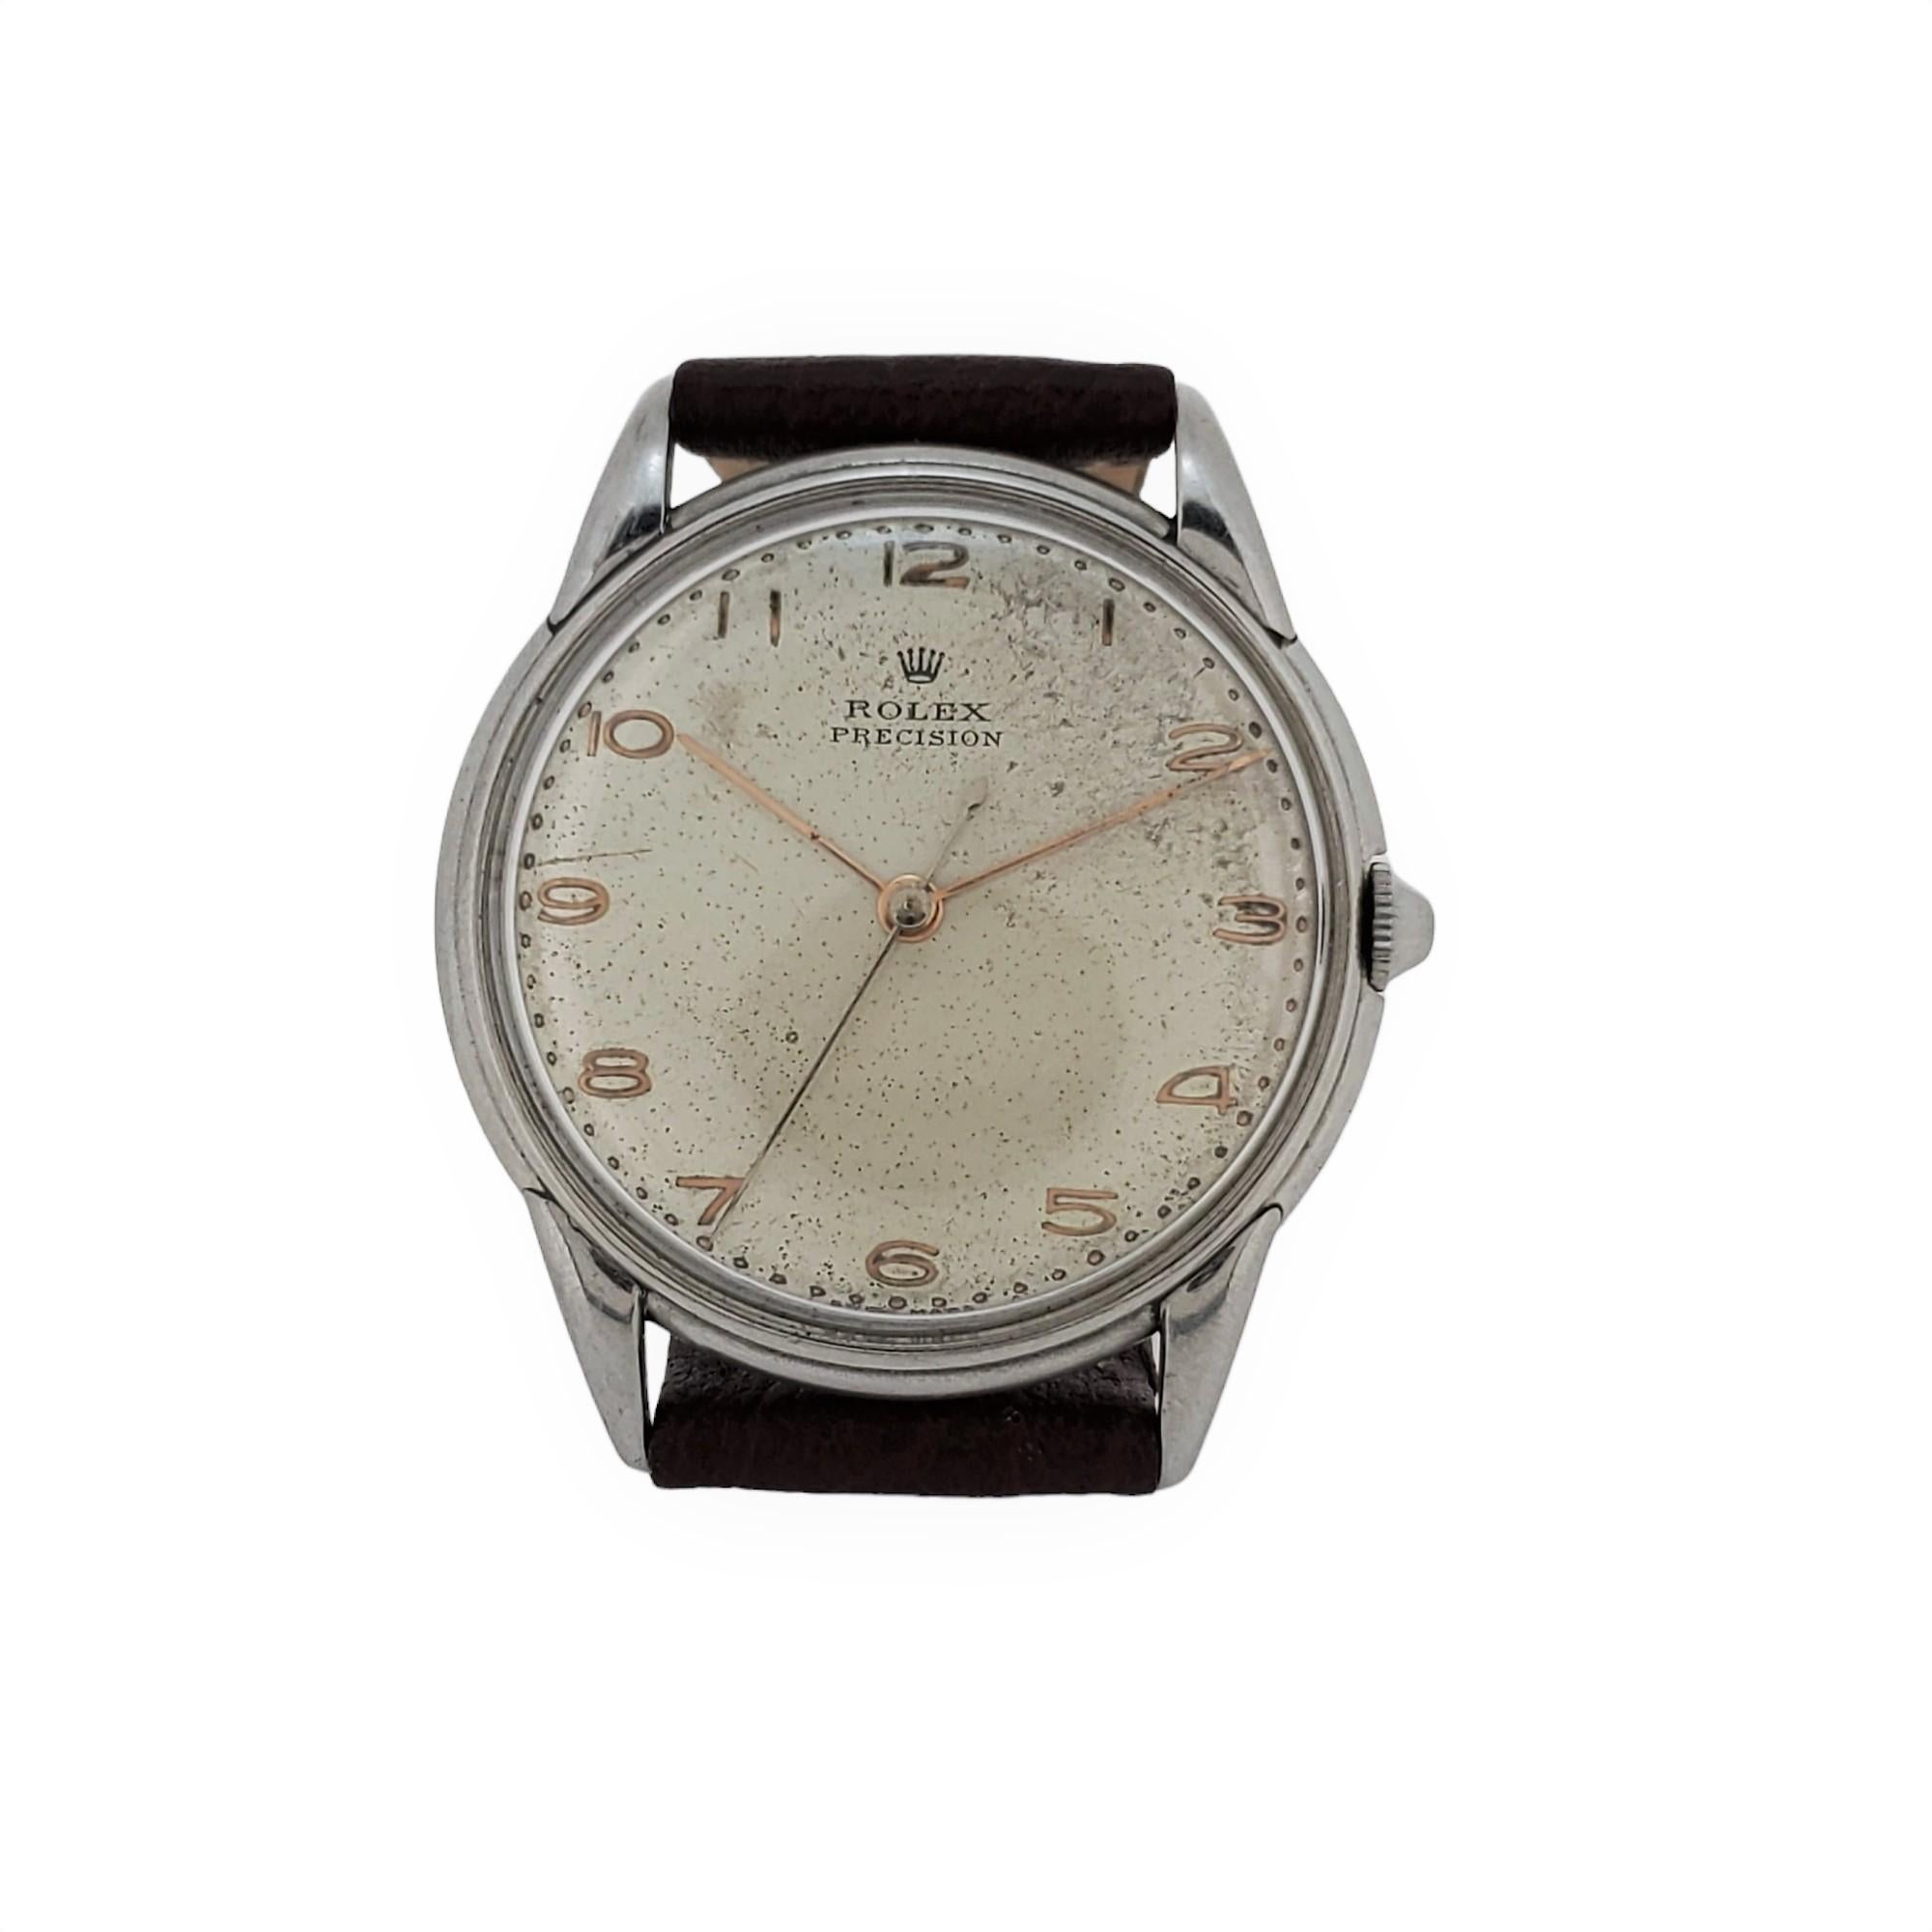 Rolex Precision 4219 stainless steel watch, Circa 1950's  All original 2